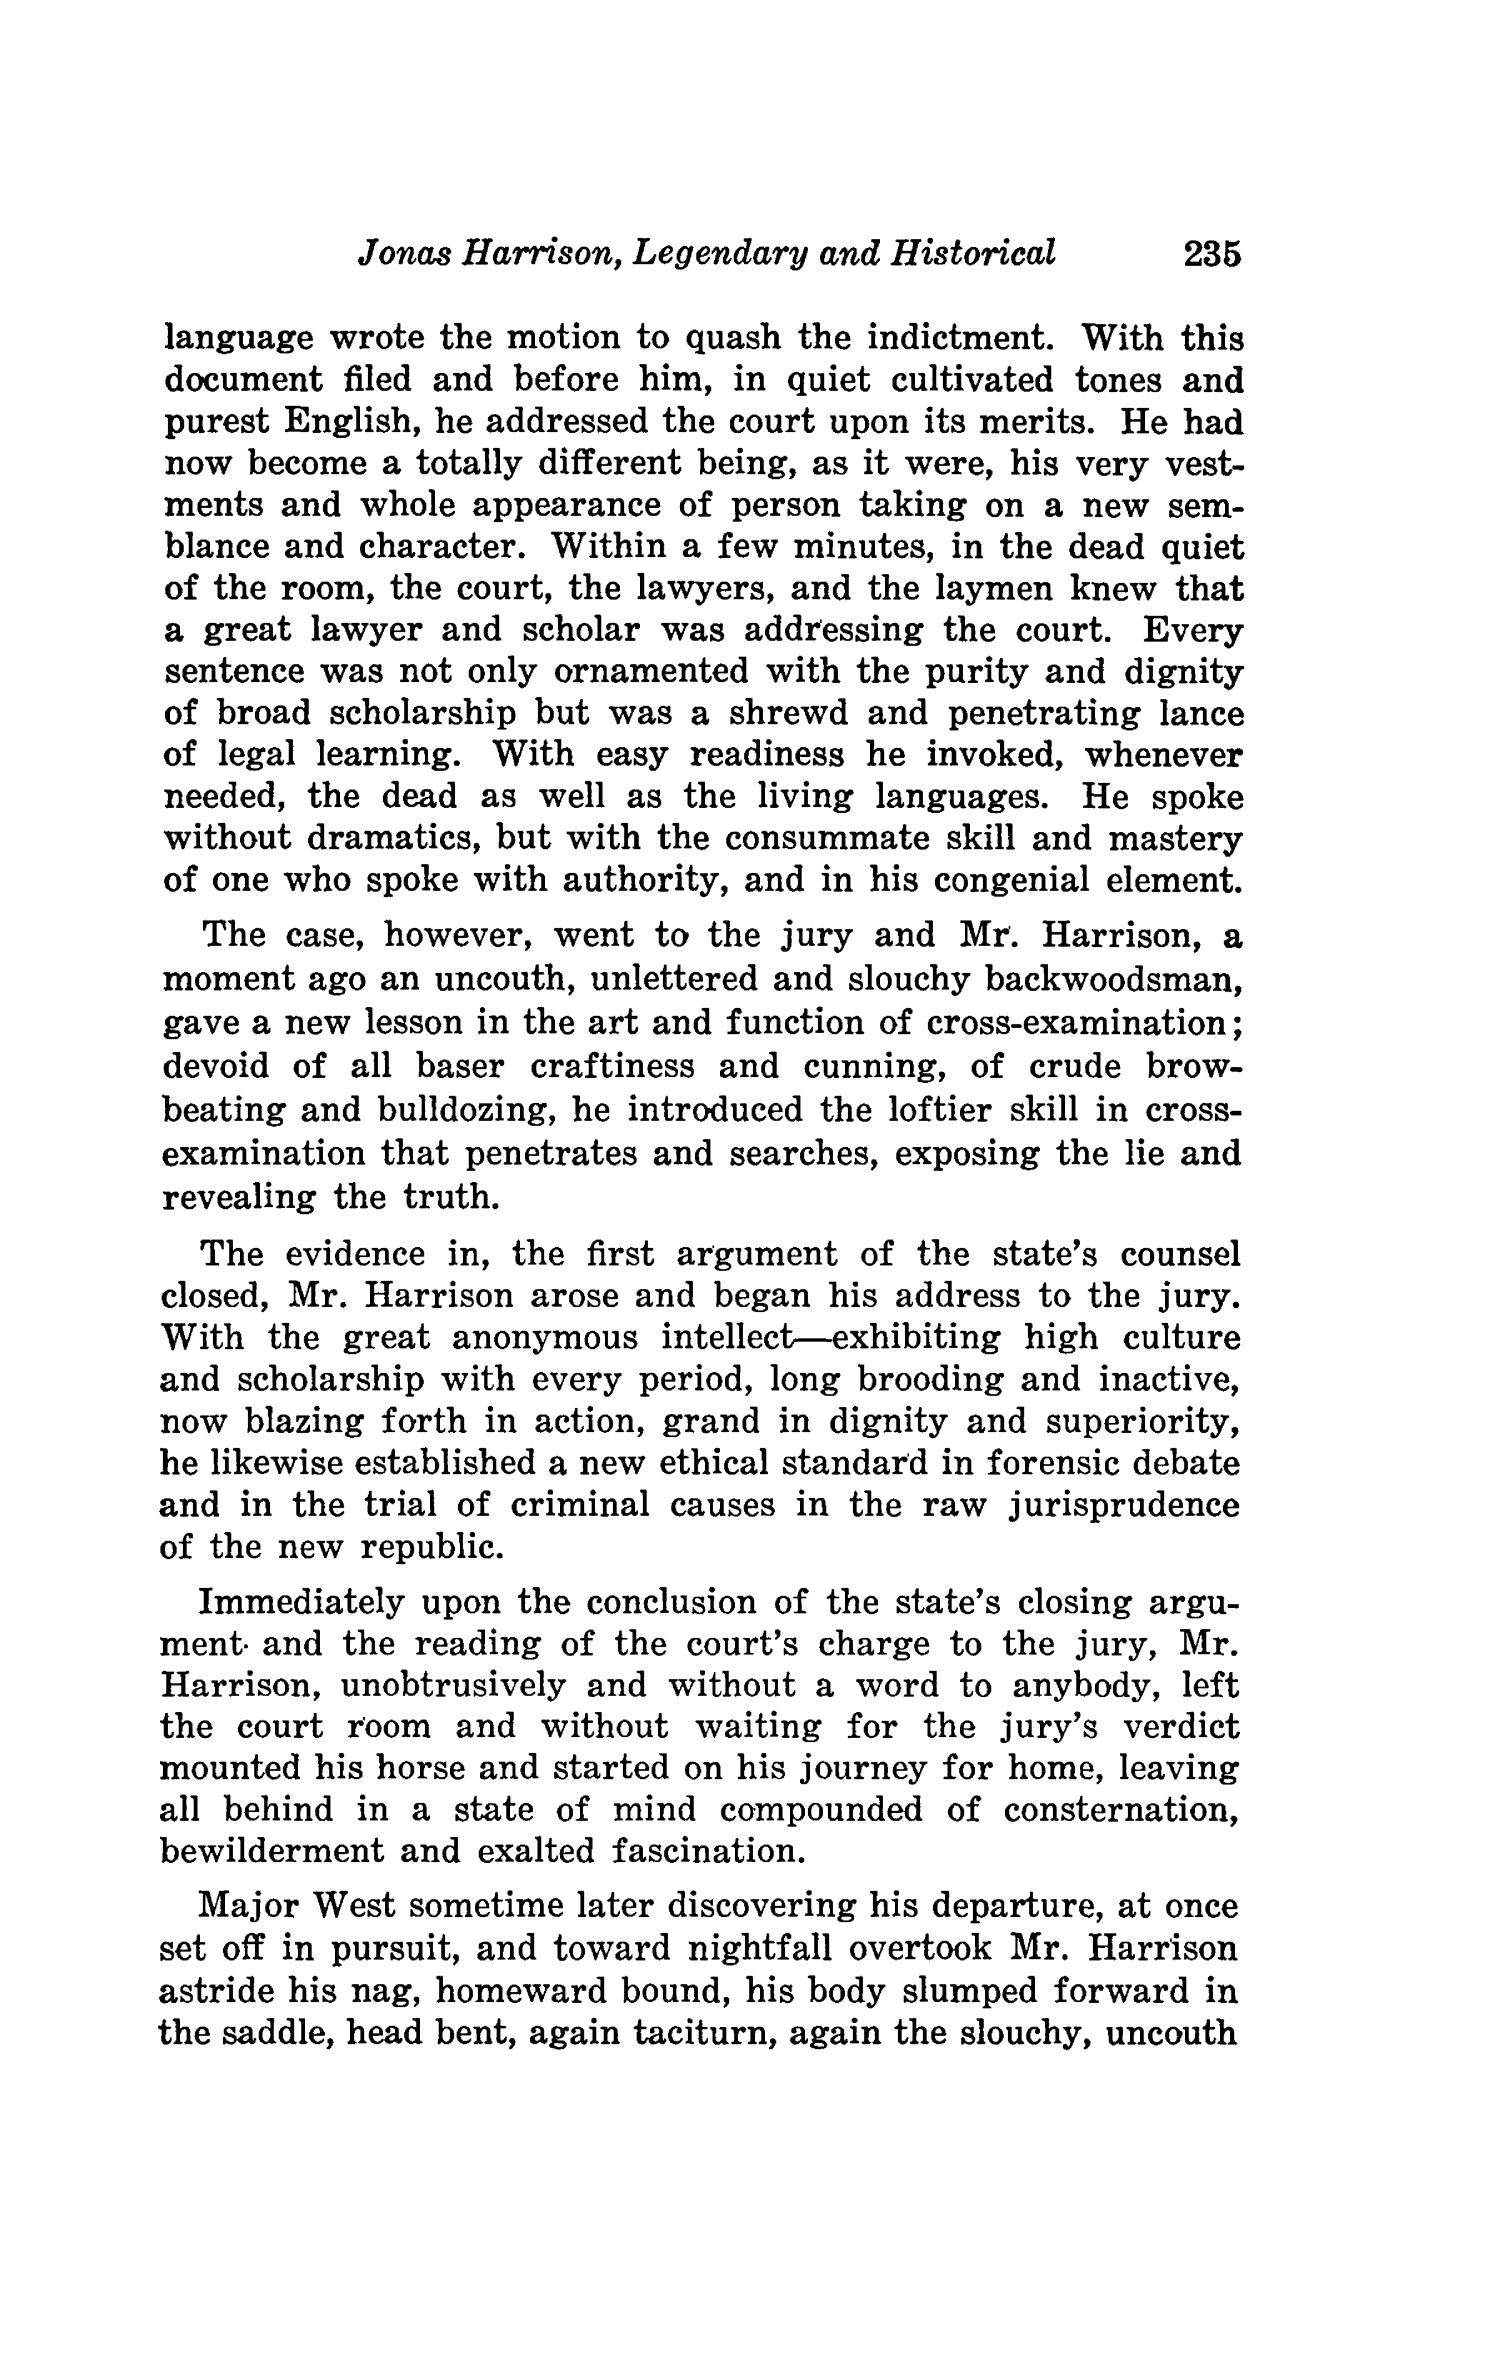 The Southwestern Historical Quarterly, Volume 45, July 1941 - April, 1942
                                                
                                                    235
                                                